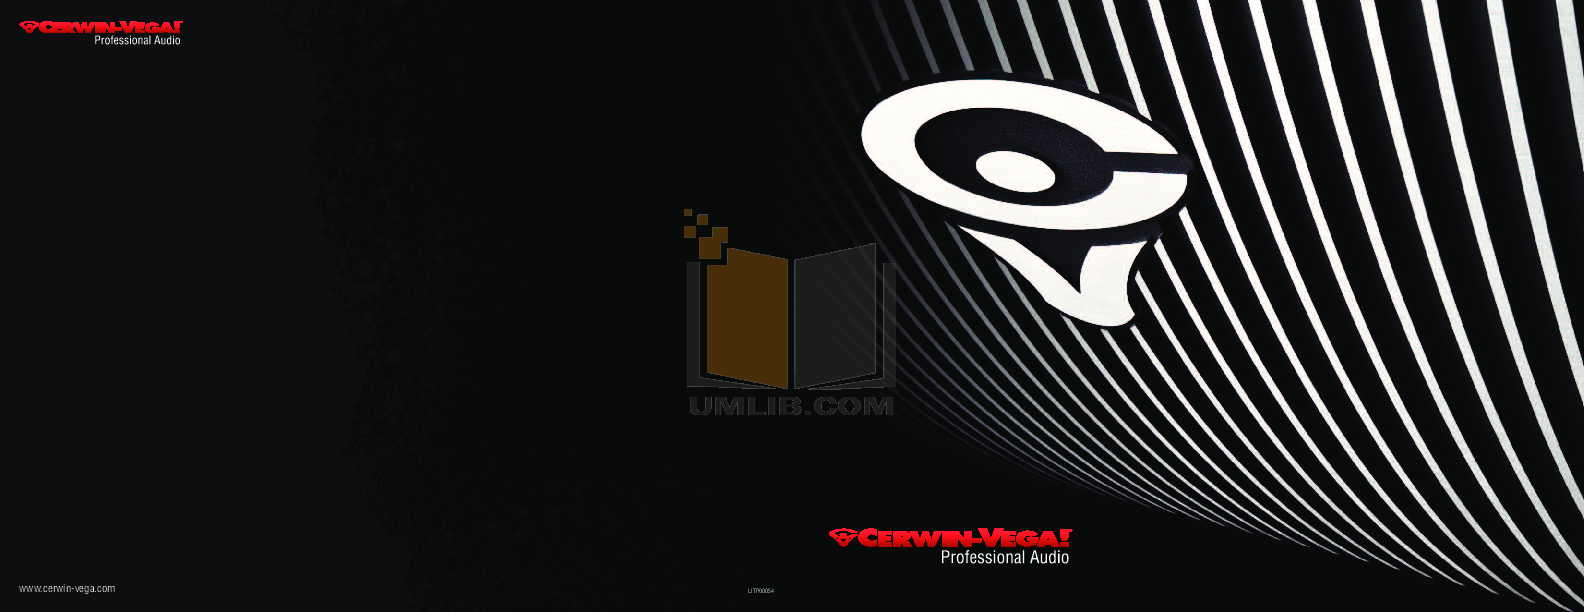 Download free pdf for Cerwin-Vega CLS-12 Speaker manual